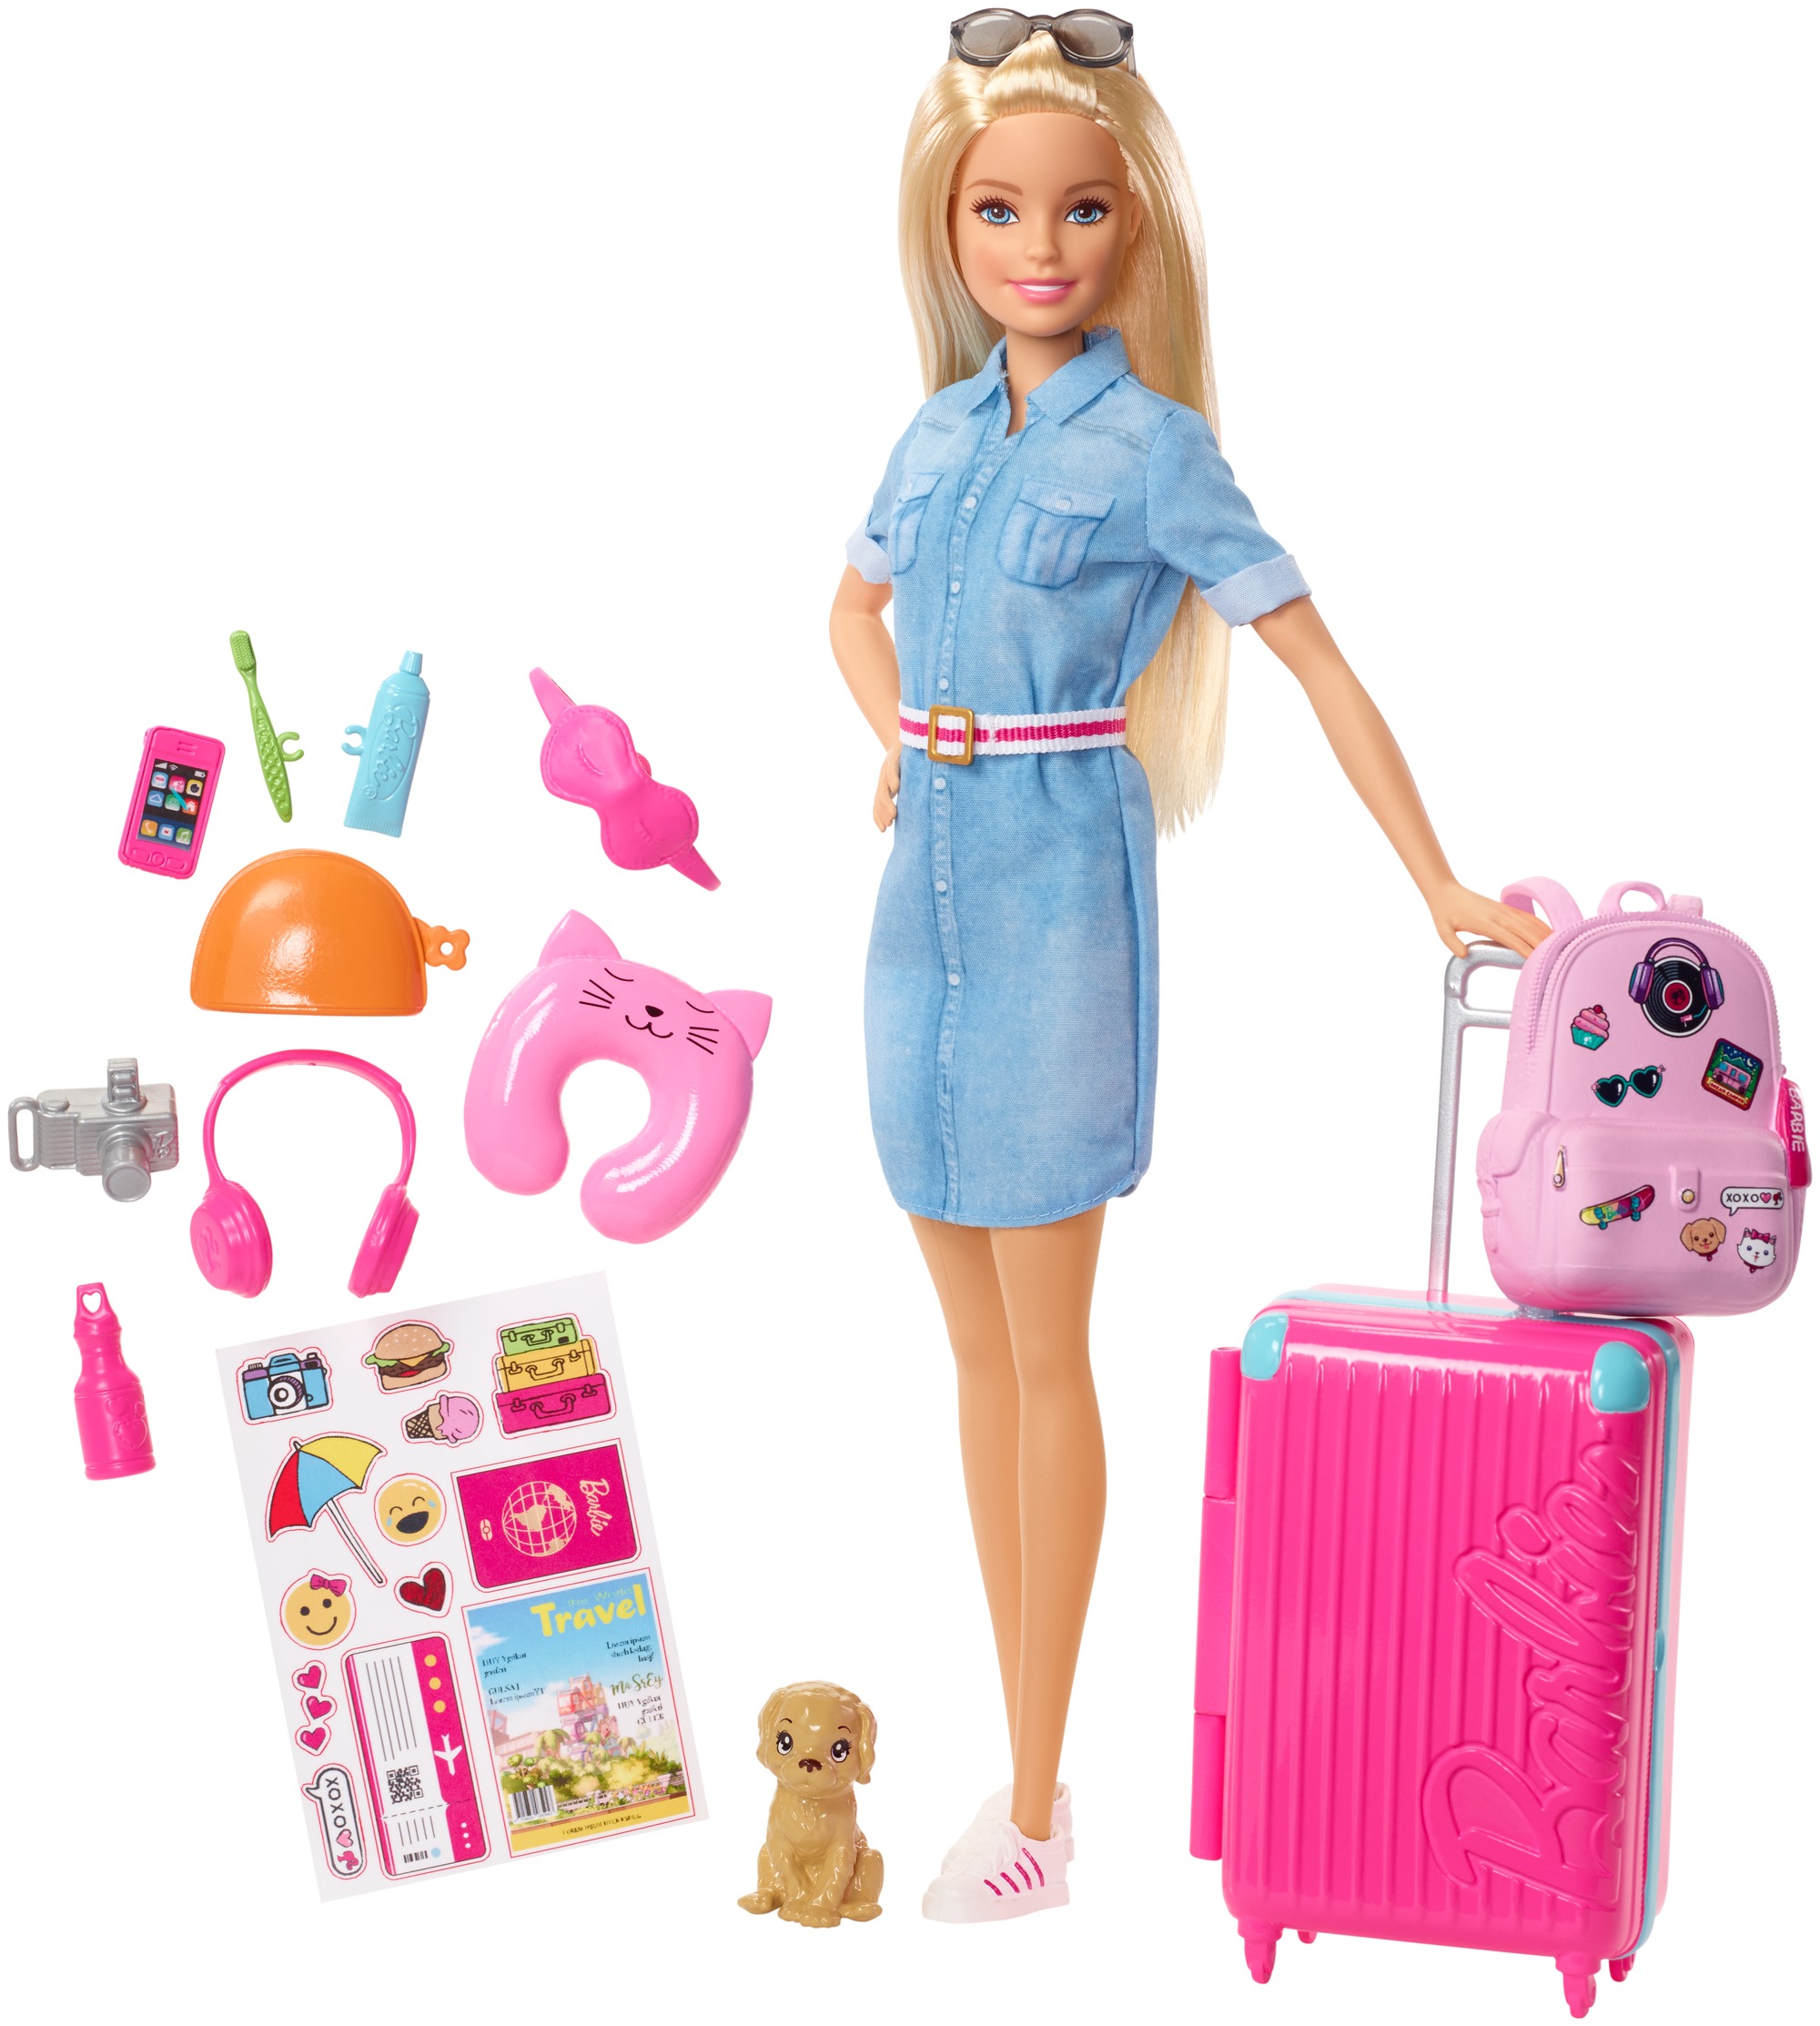 barbie accessories kmart